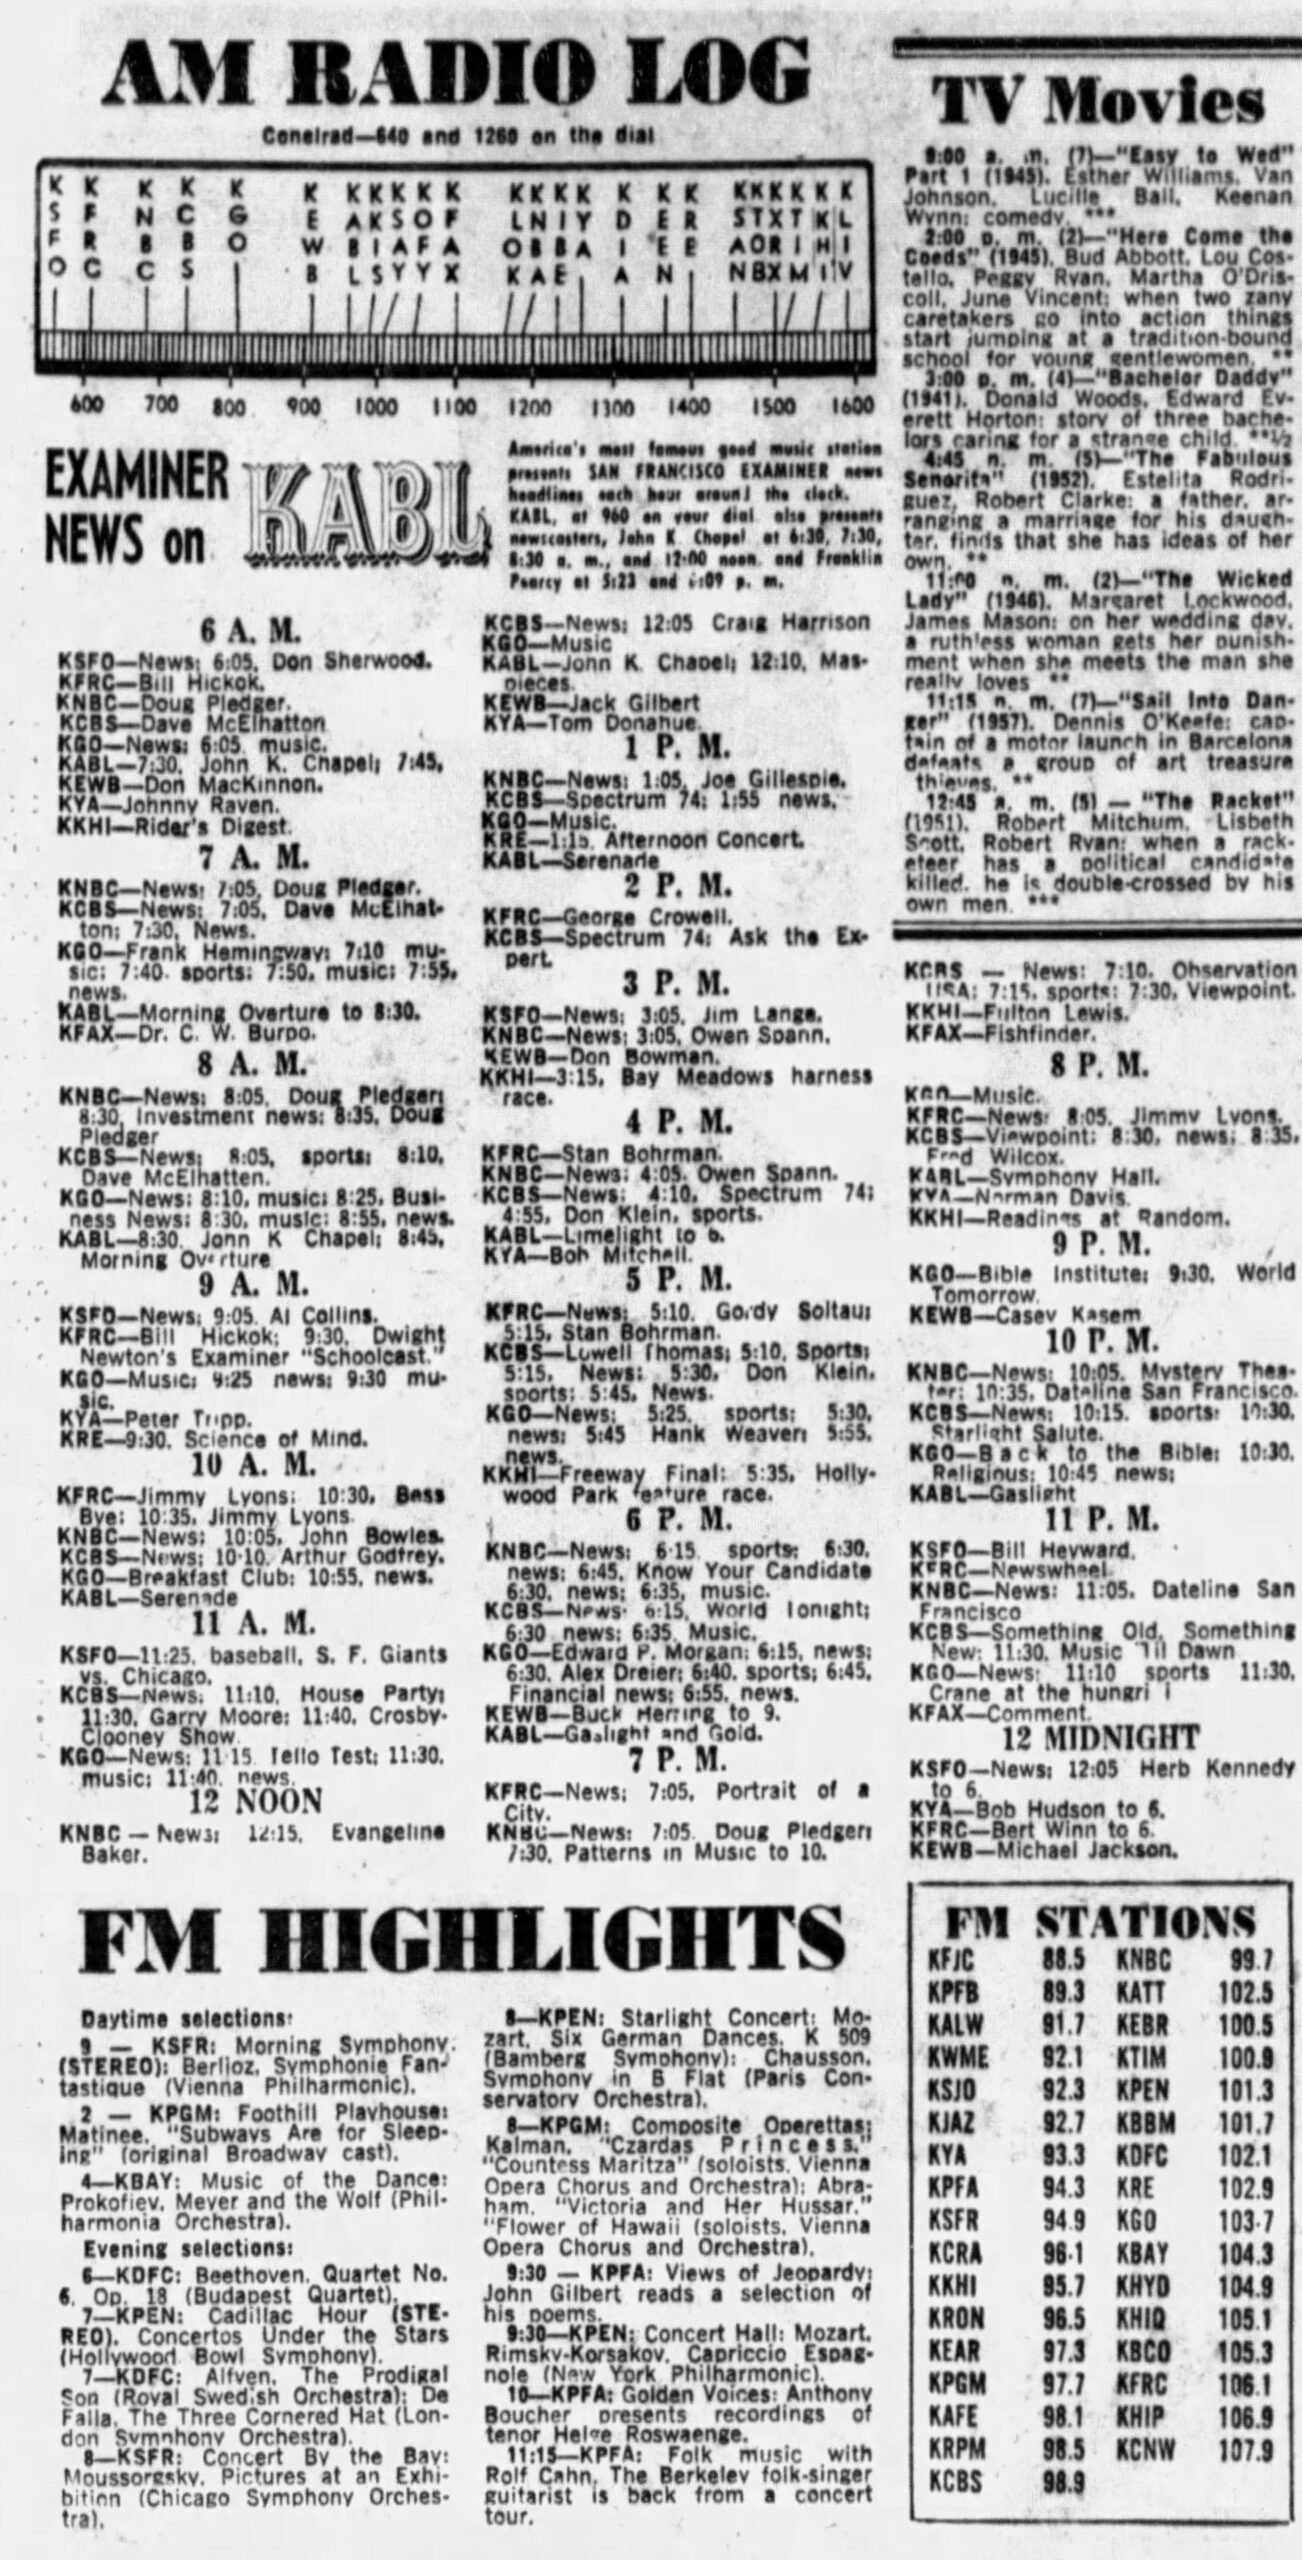 San Francisco, Ca. (Examiner) Radio Logs 1960-1965 –  Broadcast  History & Current Affairs